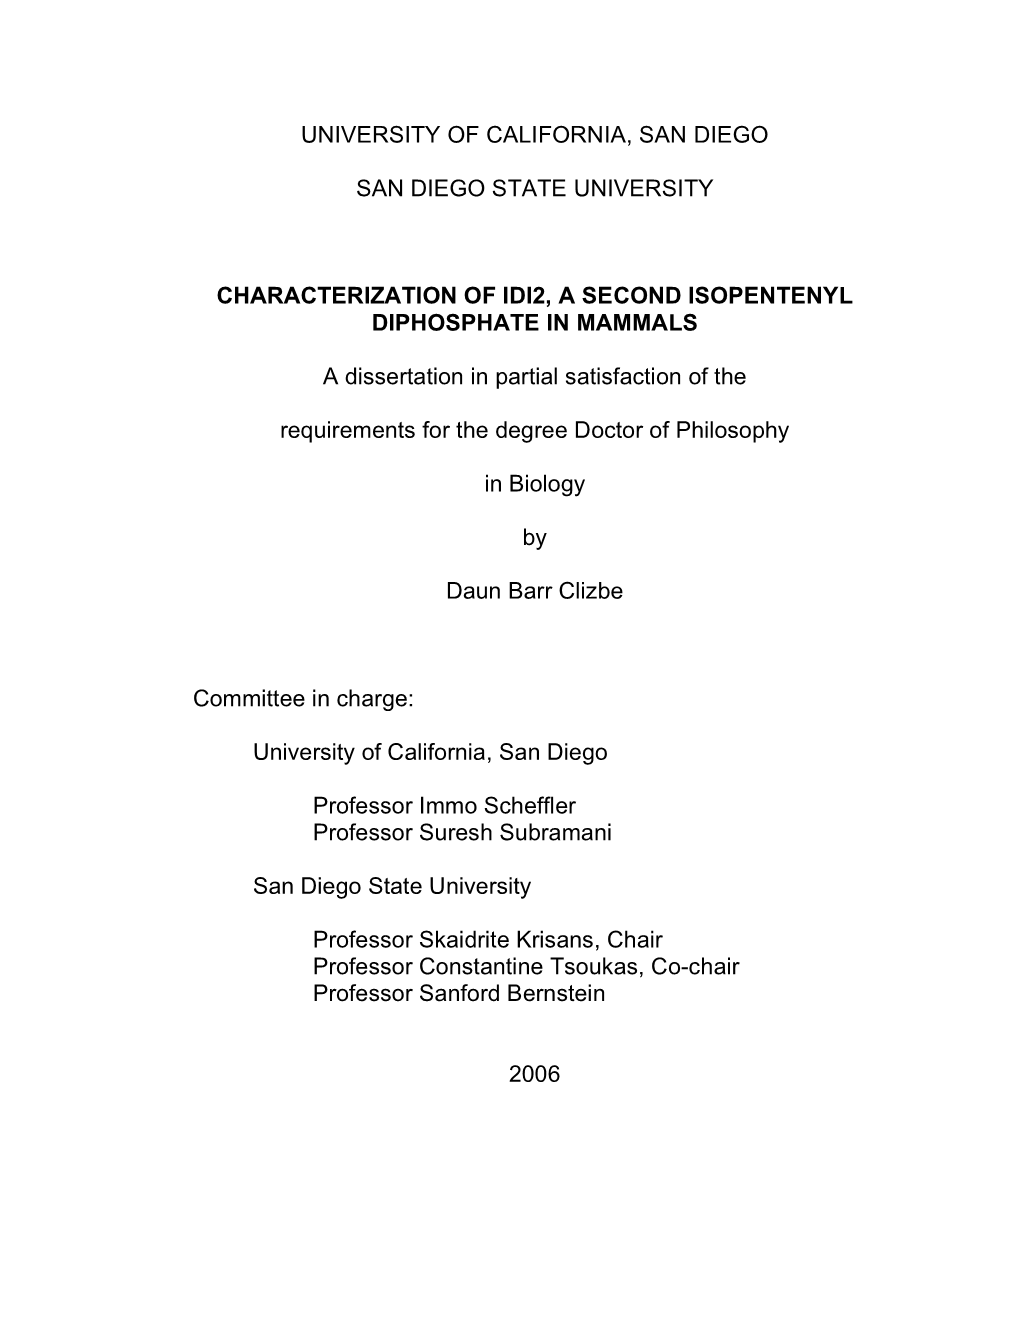 University of California, San Diego San Diego State